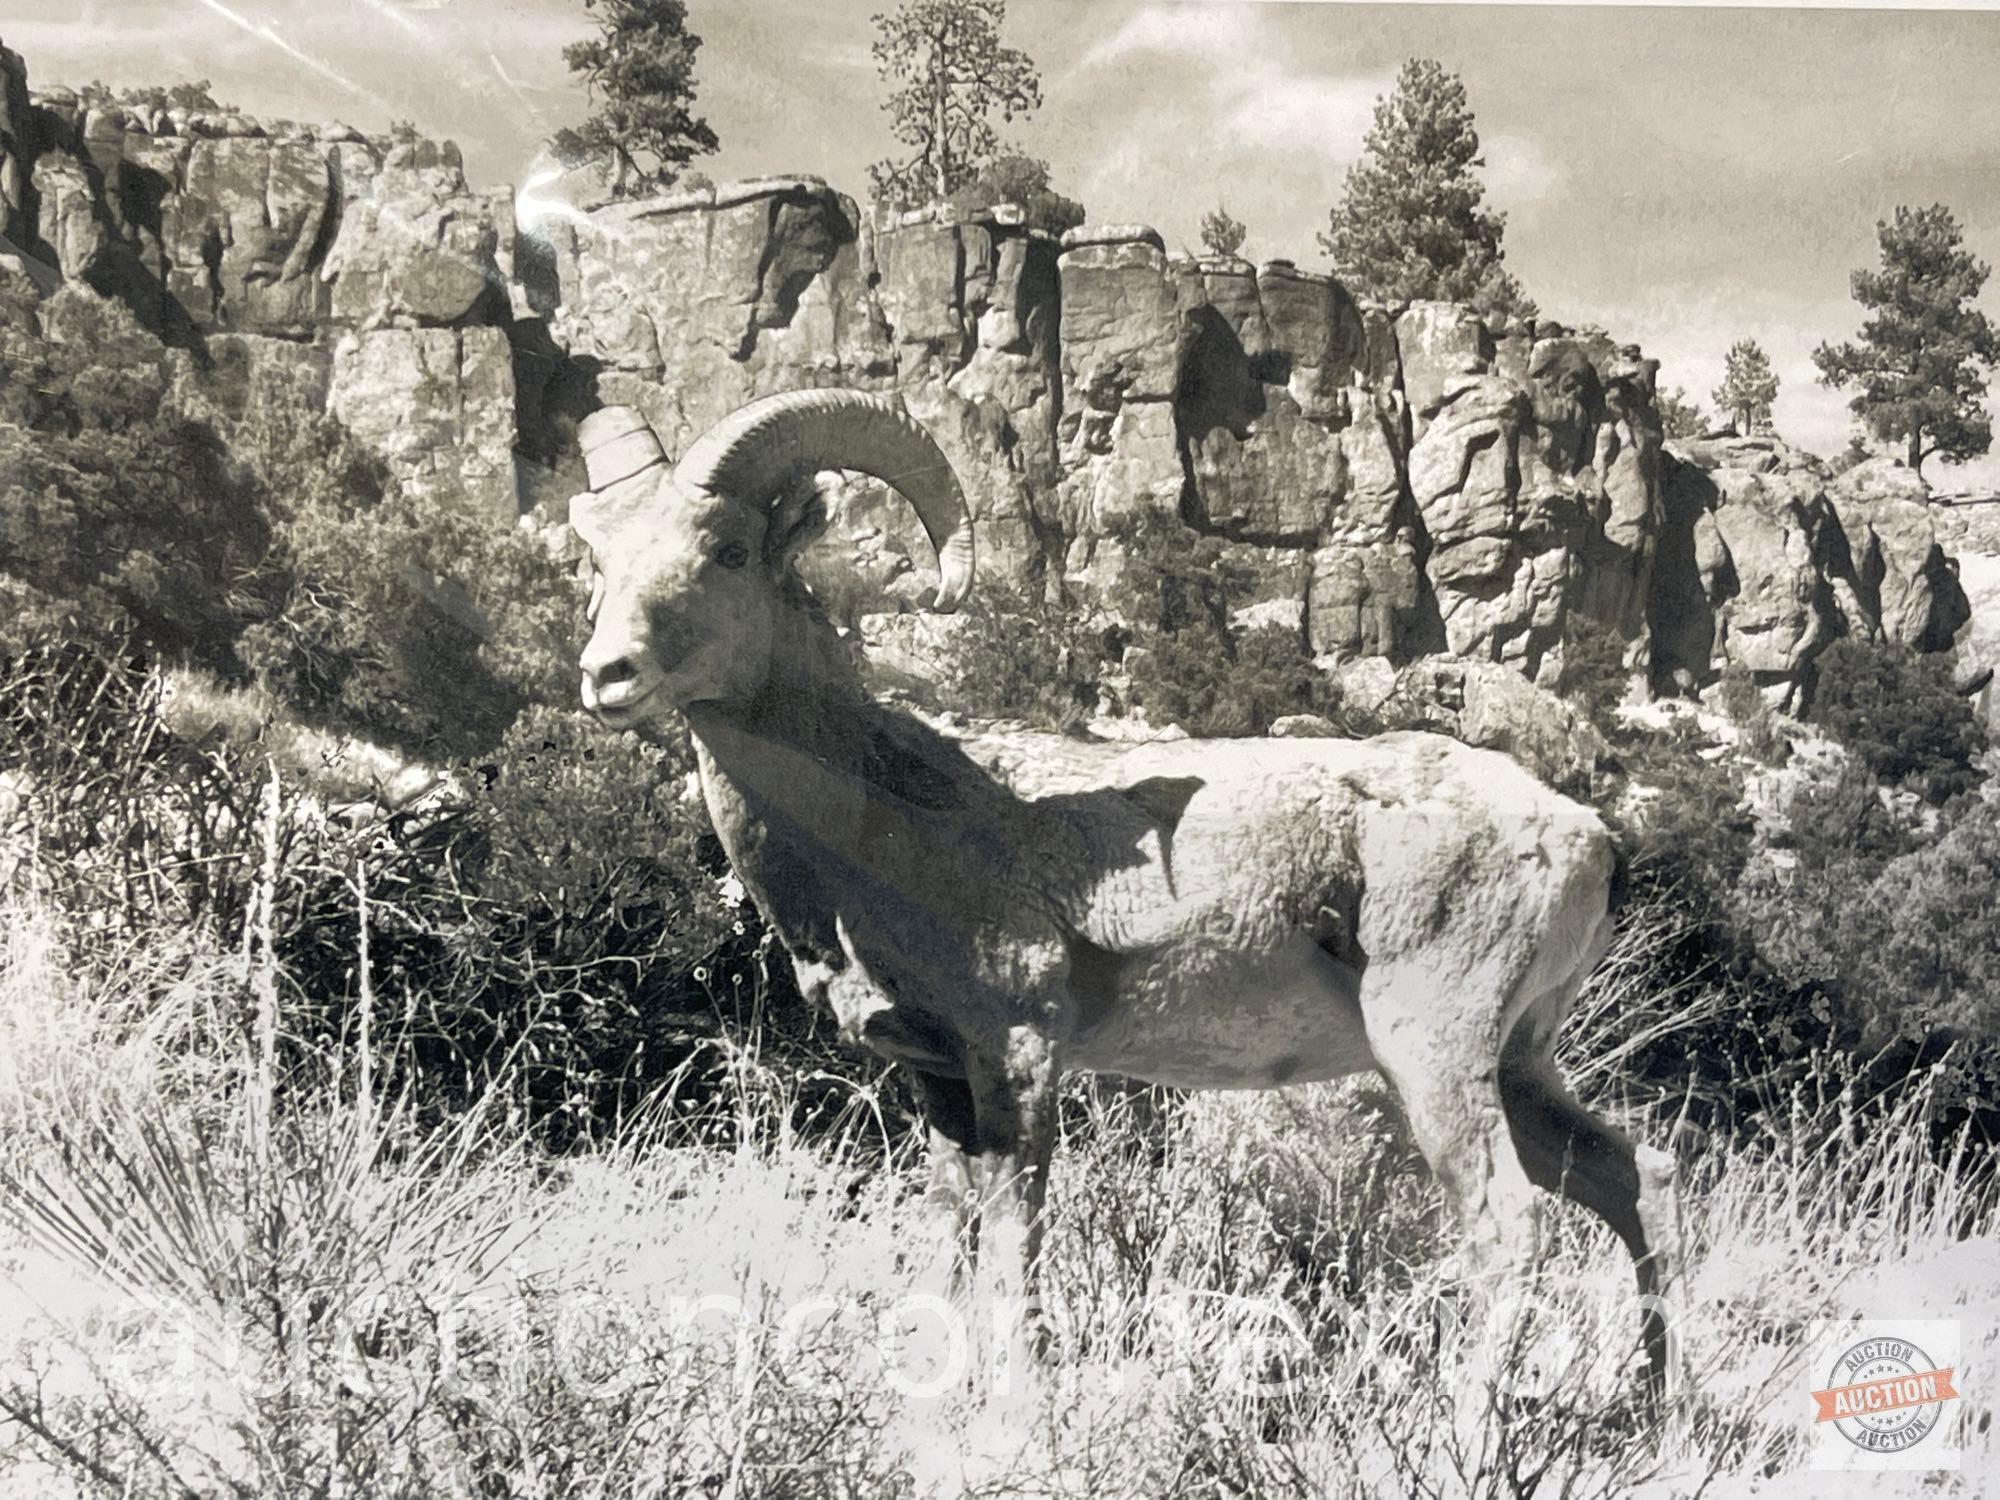 Artwork - Artist Proof, "Bighorn Ram" by Sam Taylor